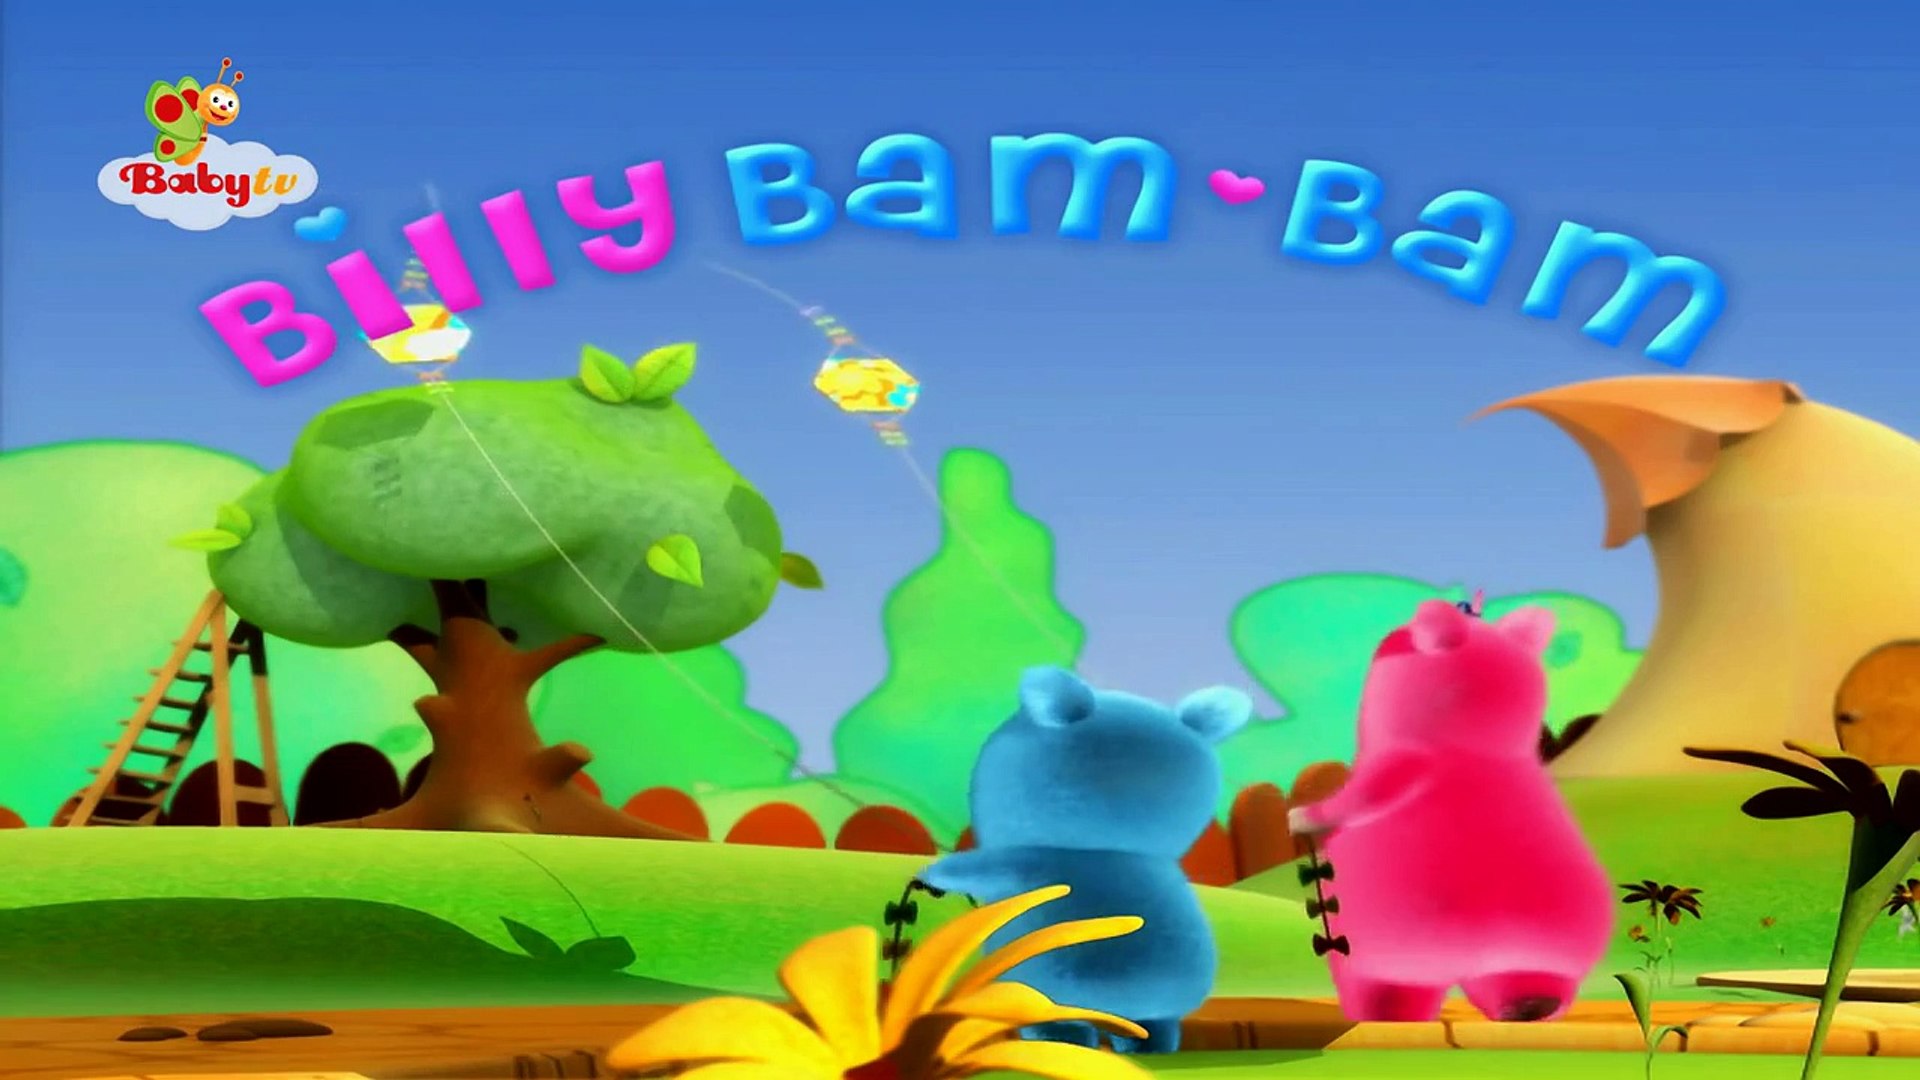 Billy Bam Bam- Choo Choo Train! - video Dailymotion